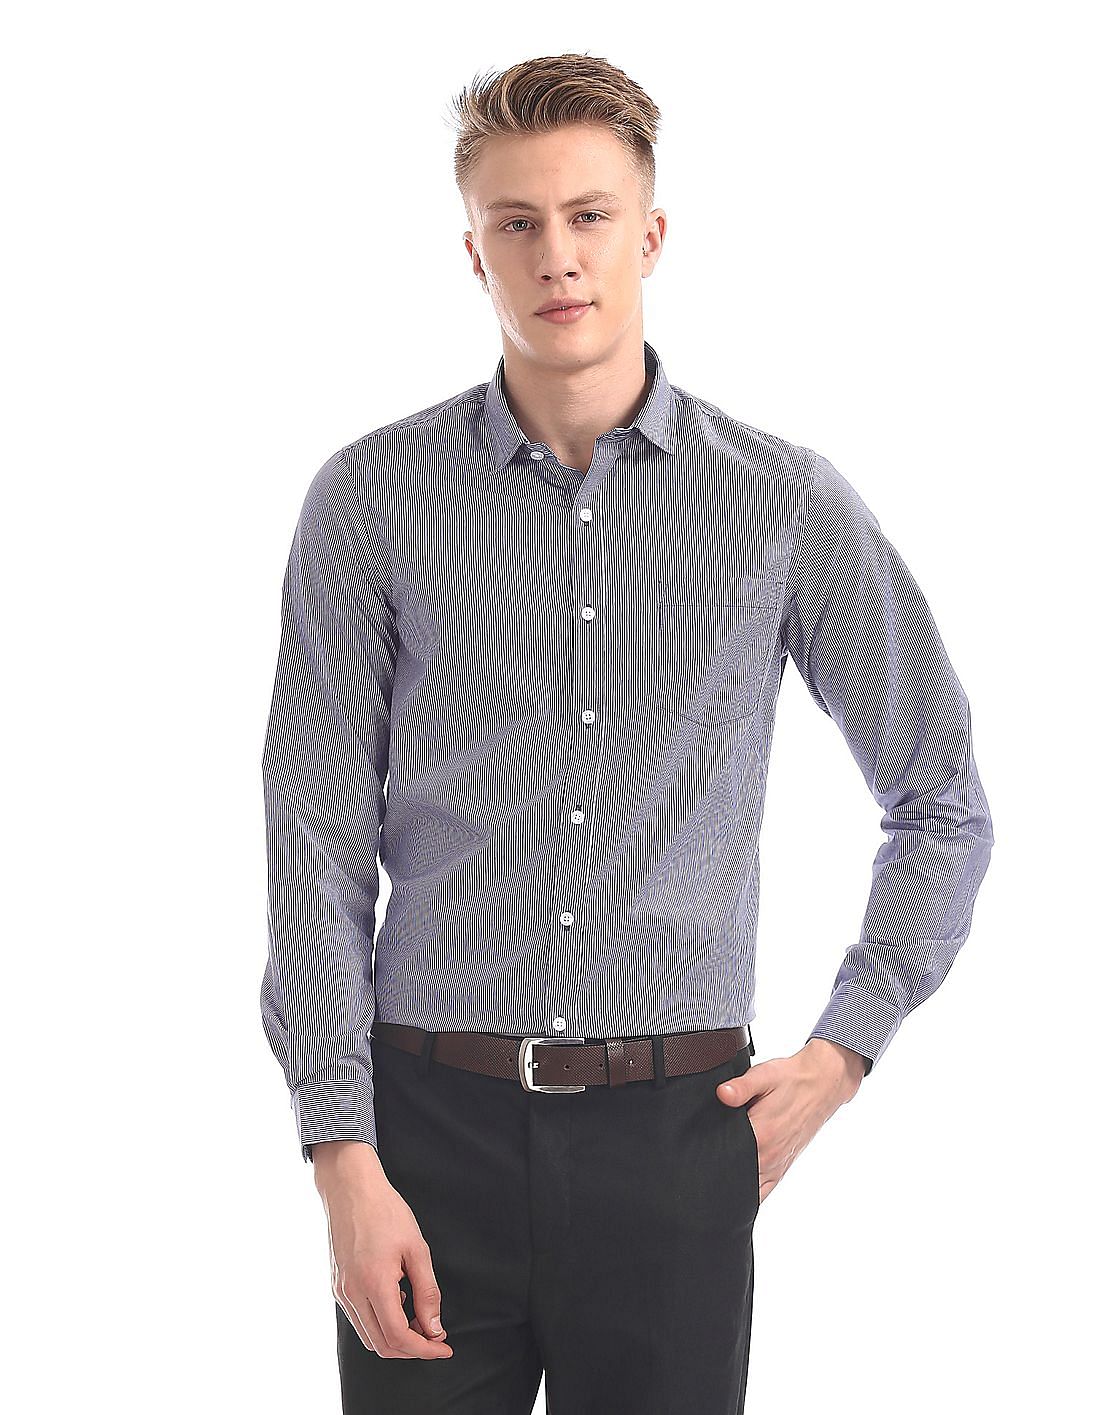 Buy Excalibur Mitered Cuff Vertical Stripe Shirt - NNNOW.com